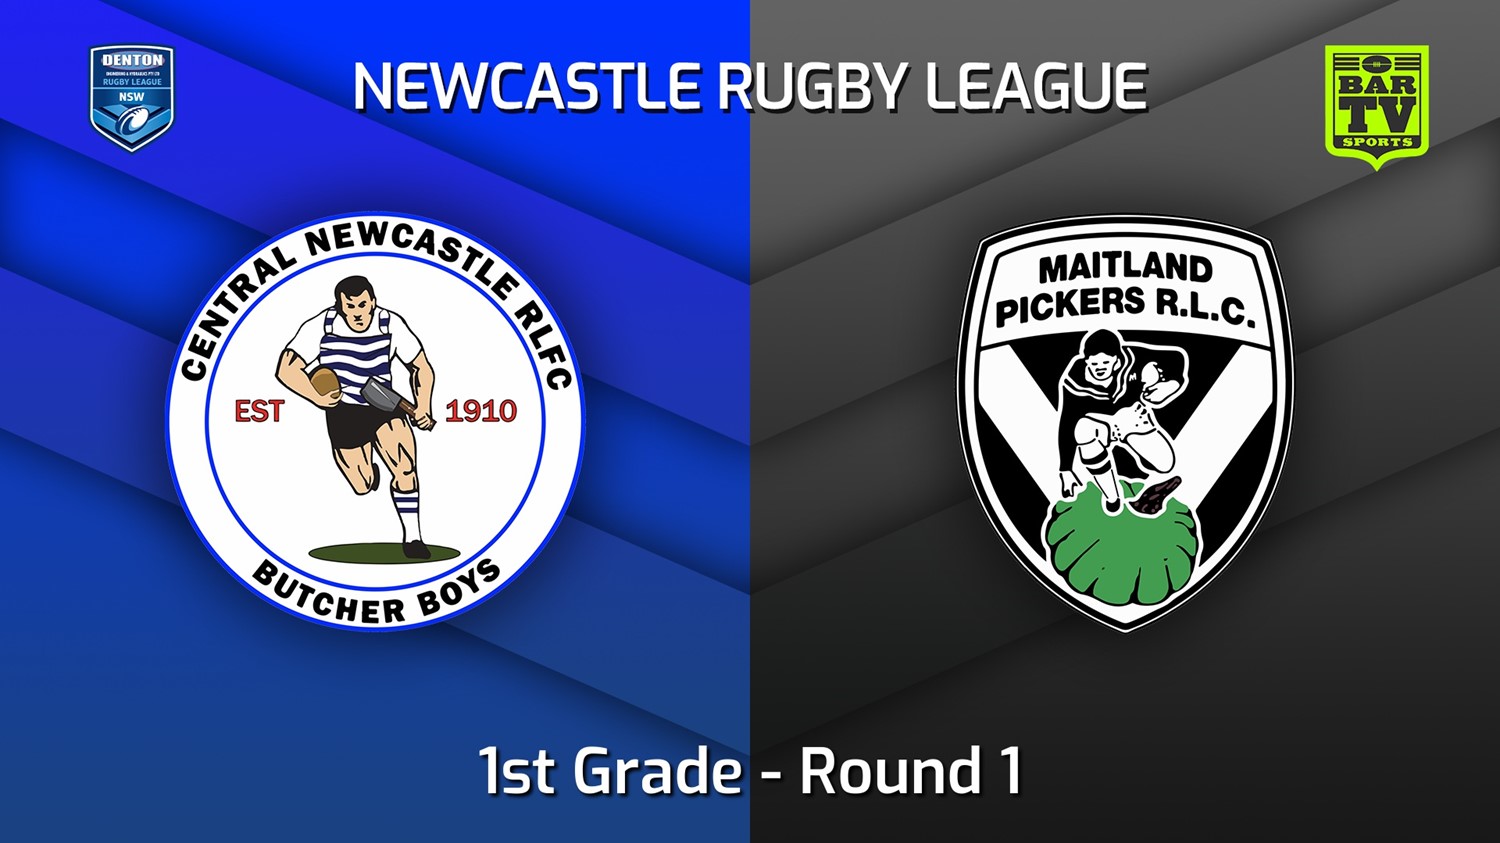 220327-Newcastle Round 1 - 1st Grade - Central Newcastle v Maitland Pickers Minigame Slate Image